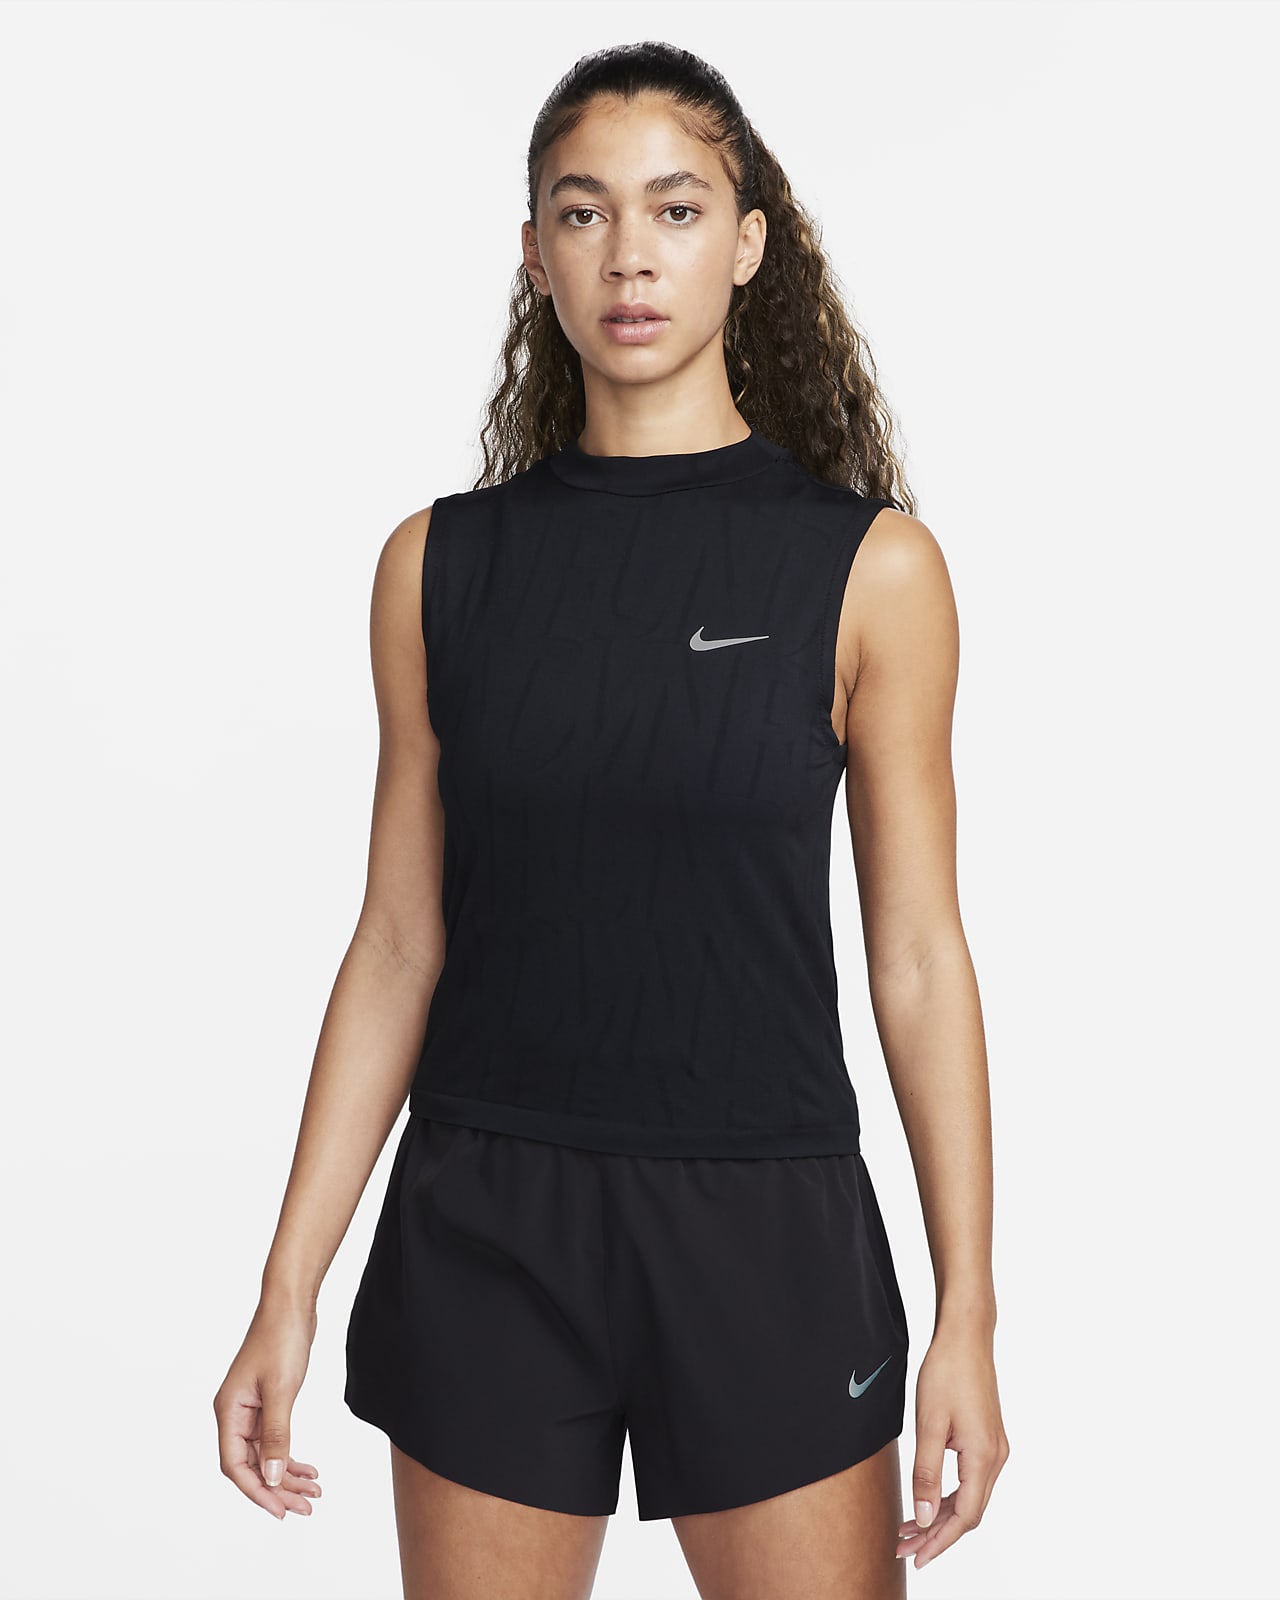 Yoga Tank Tops & Sleeveless Shirts. Nike LU